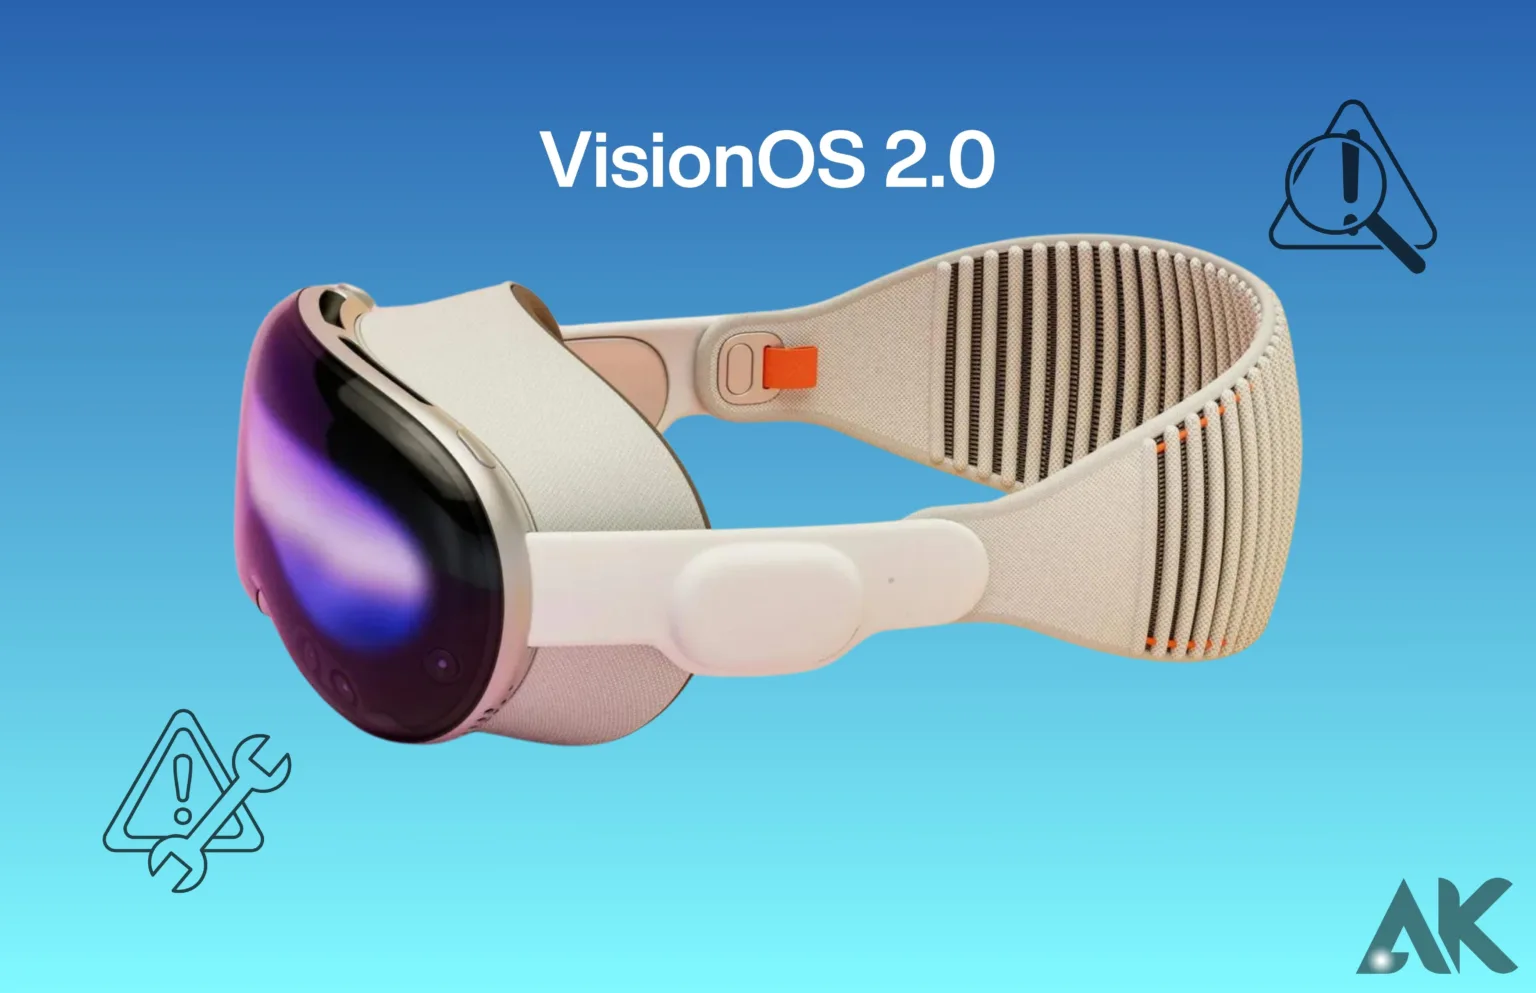 VisionOS 2.0 troubleshooting